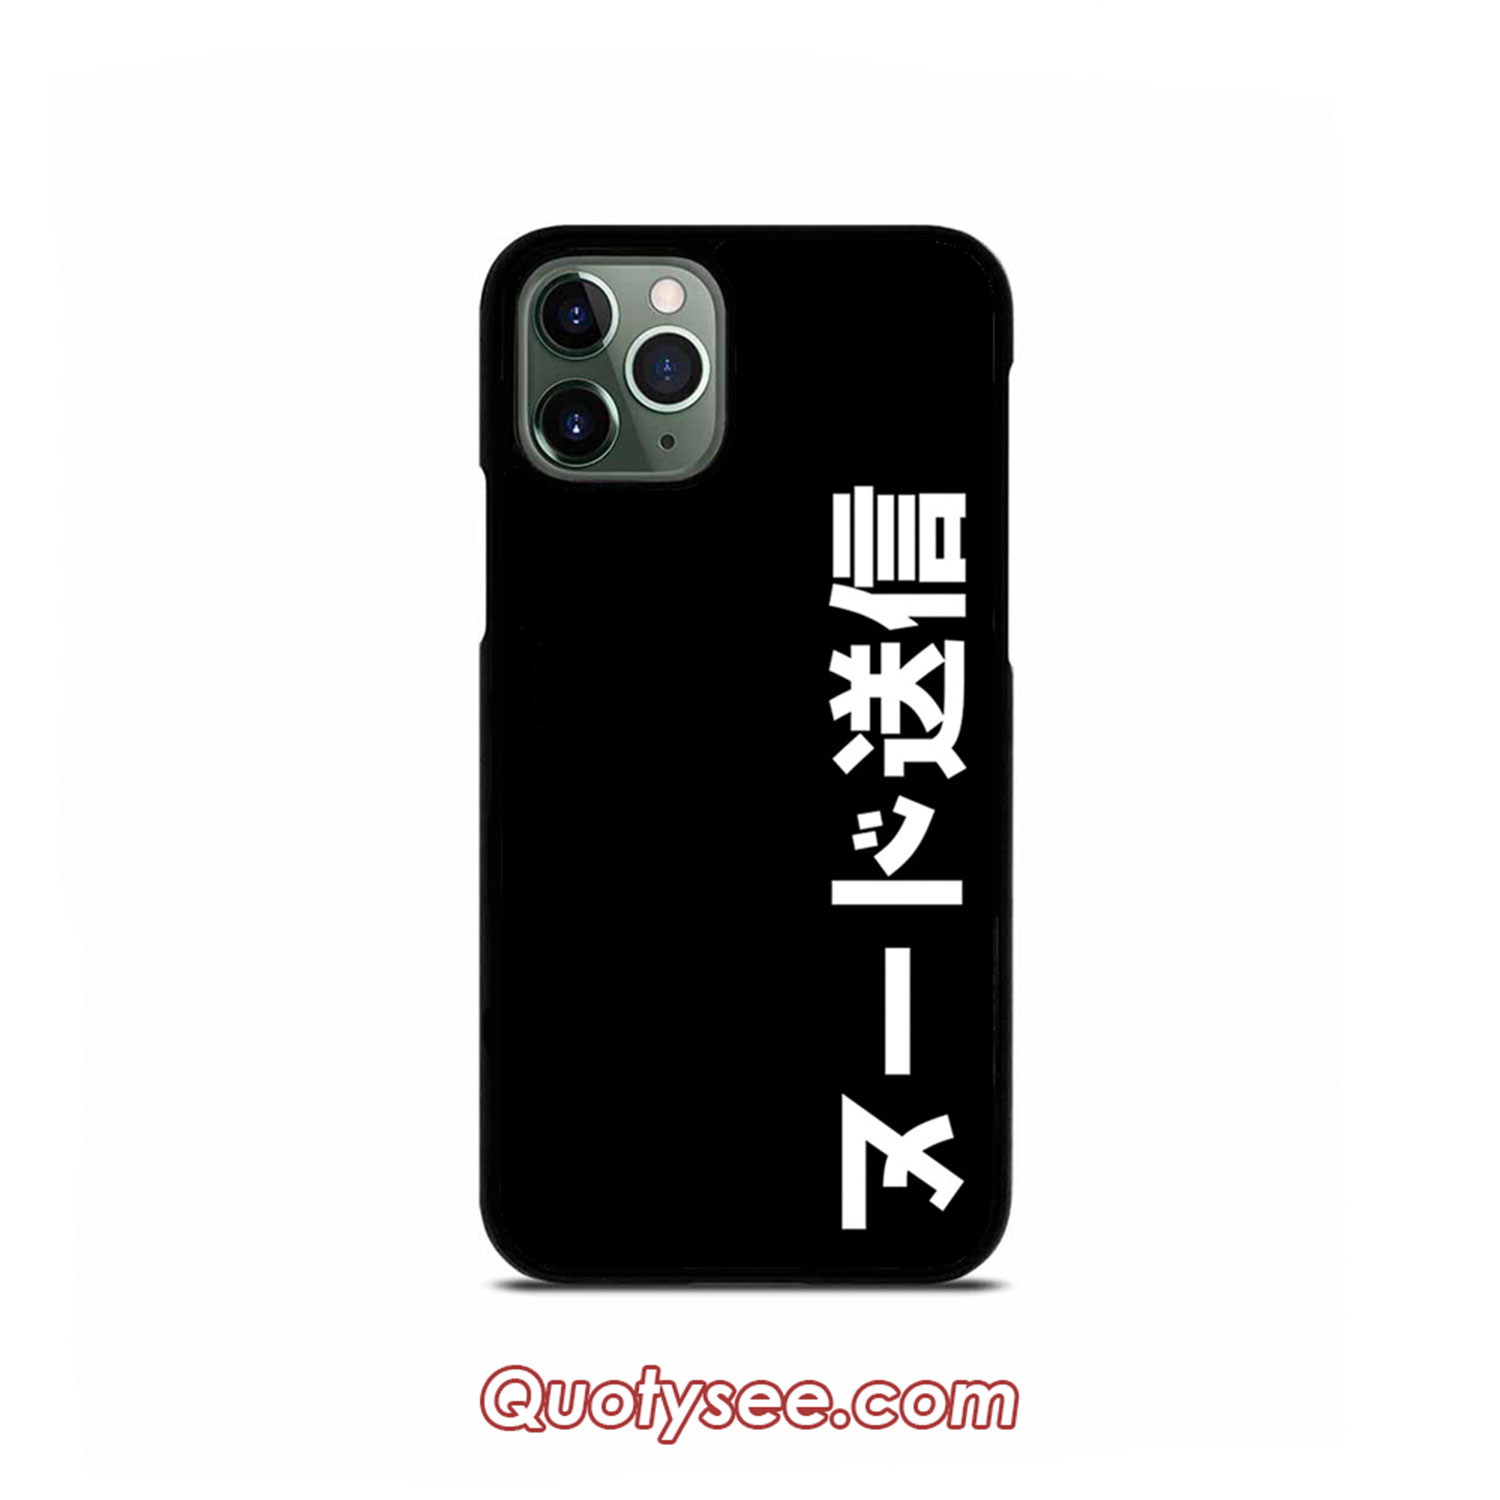 Send Nudes Japanese Jdm Iphone Case 11 11 Pro 11 Pro Max Xs Max Xr X 8 8 Plus 7 7 Plus 6 6s Quotysee Com